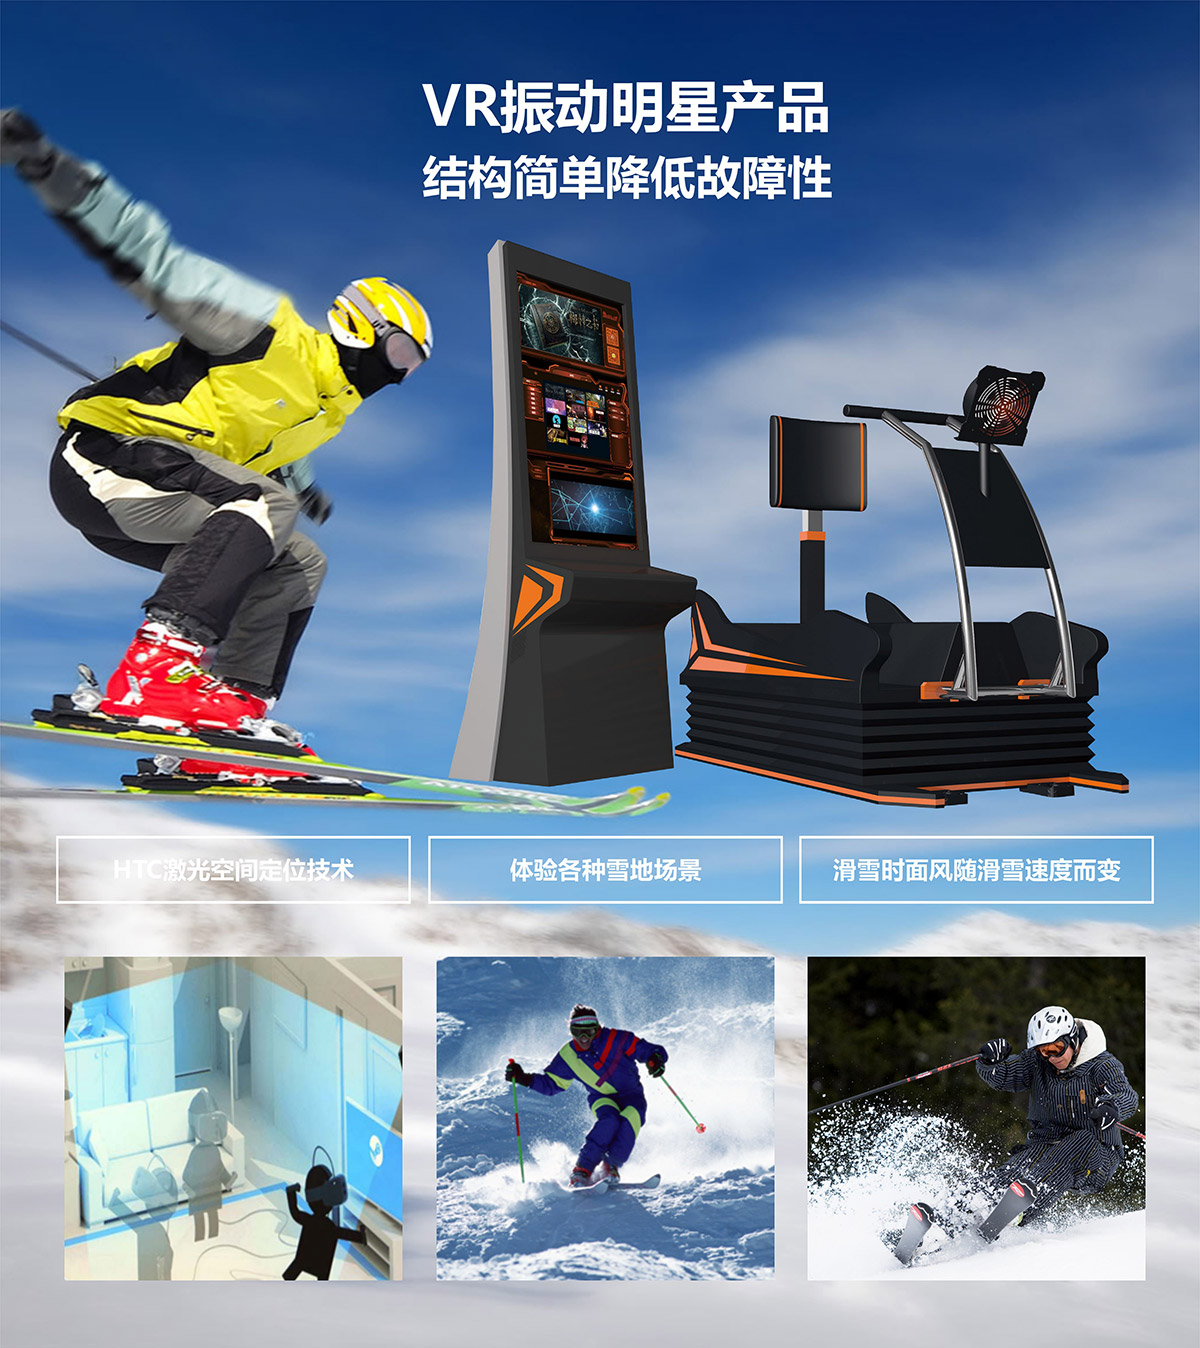 VR明星产品模拟滑雪.jpg